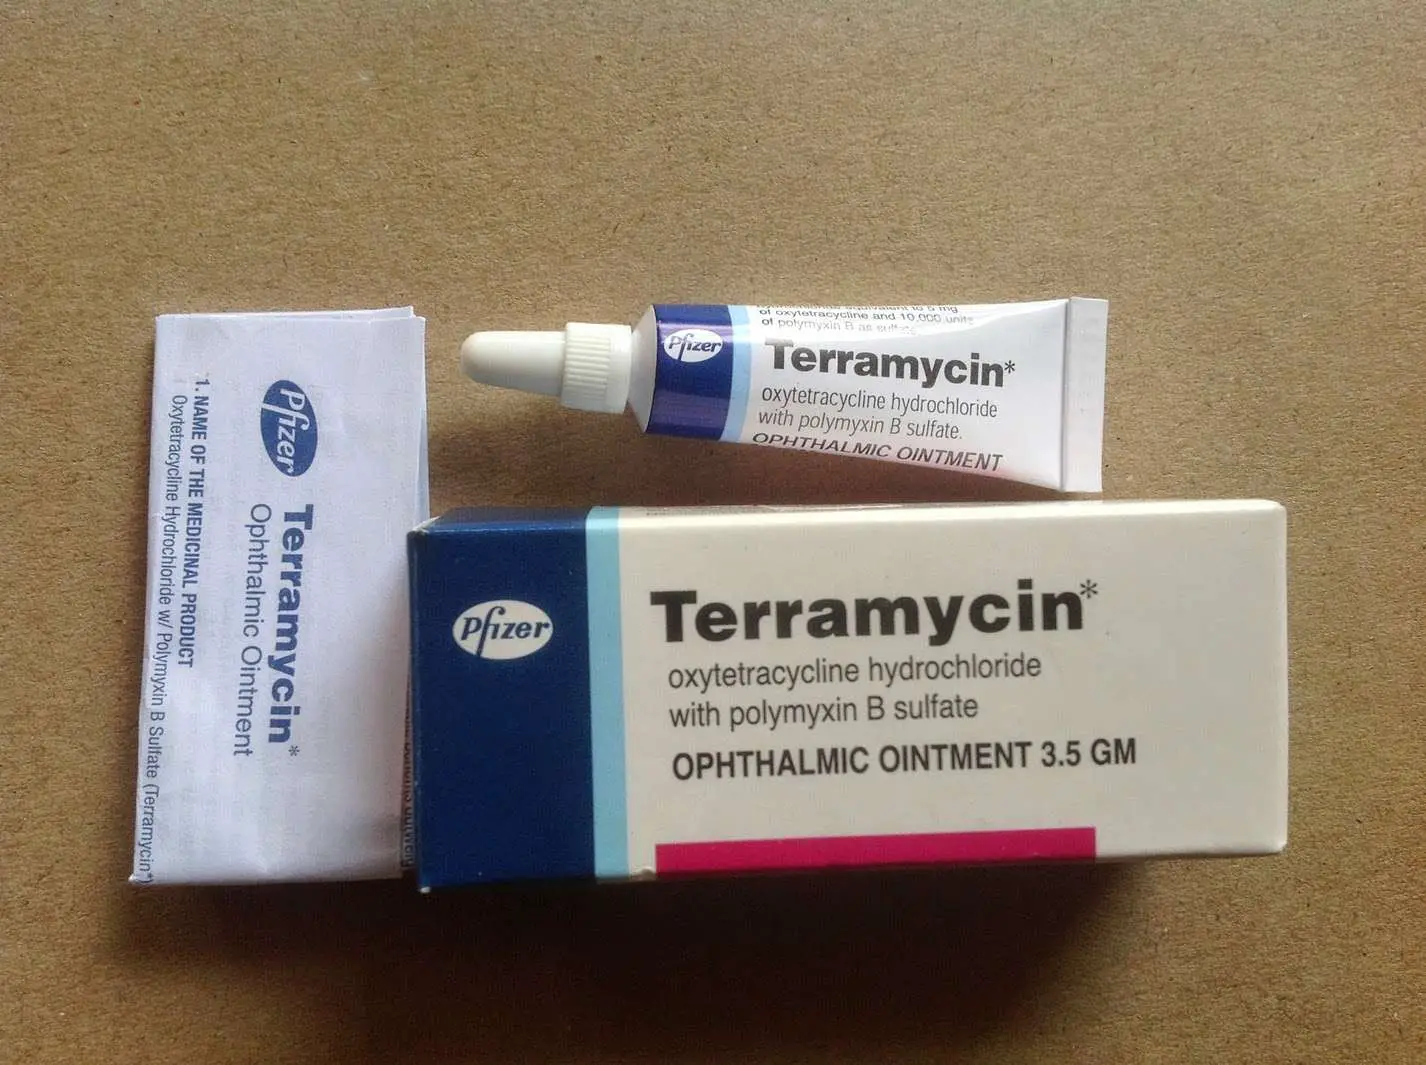 ItemThaiThai : Otomax Terramycin